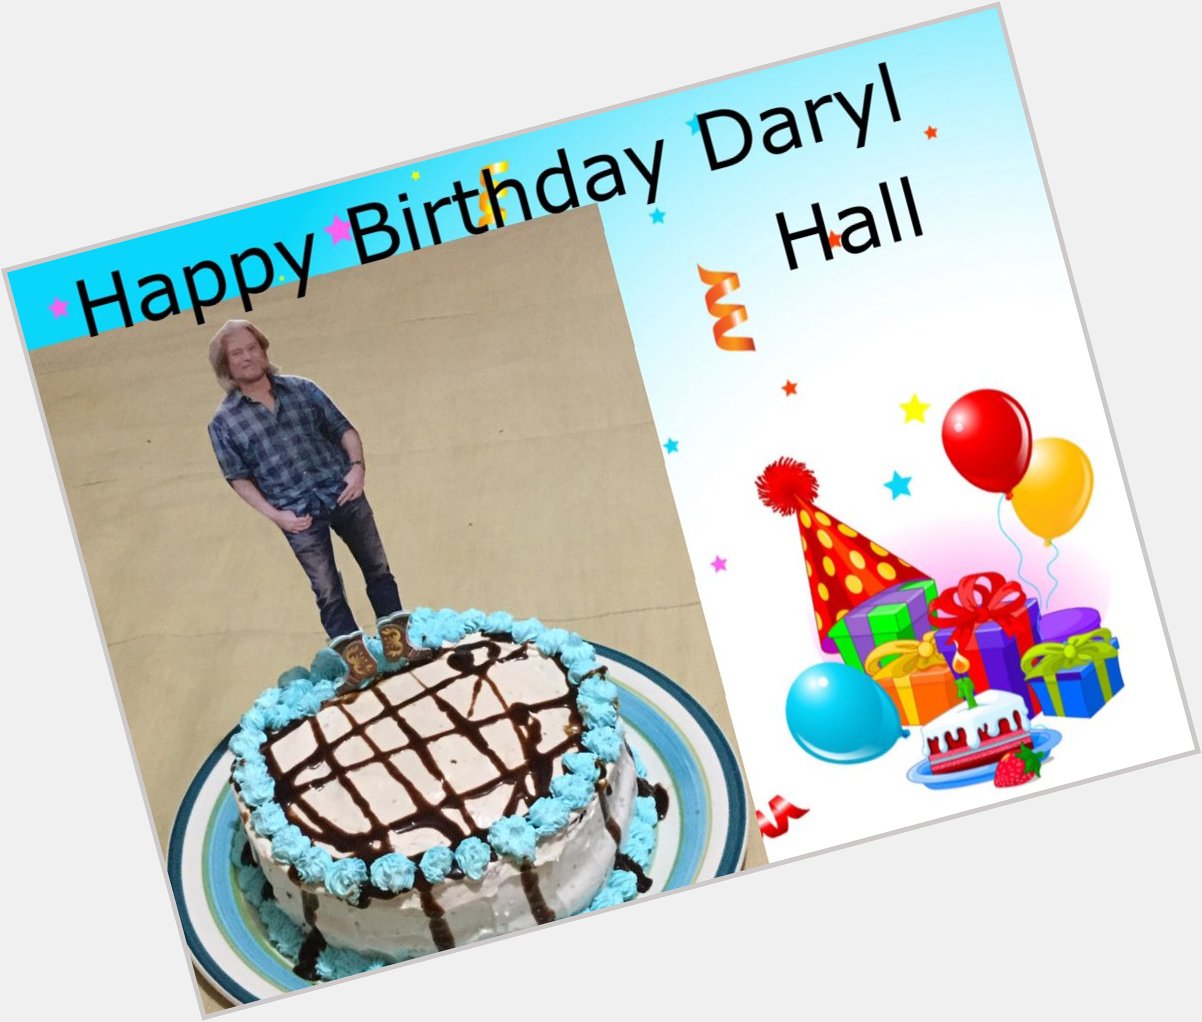  Happy Birthday Daryl hall :) hope you had a great day 